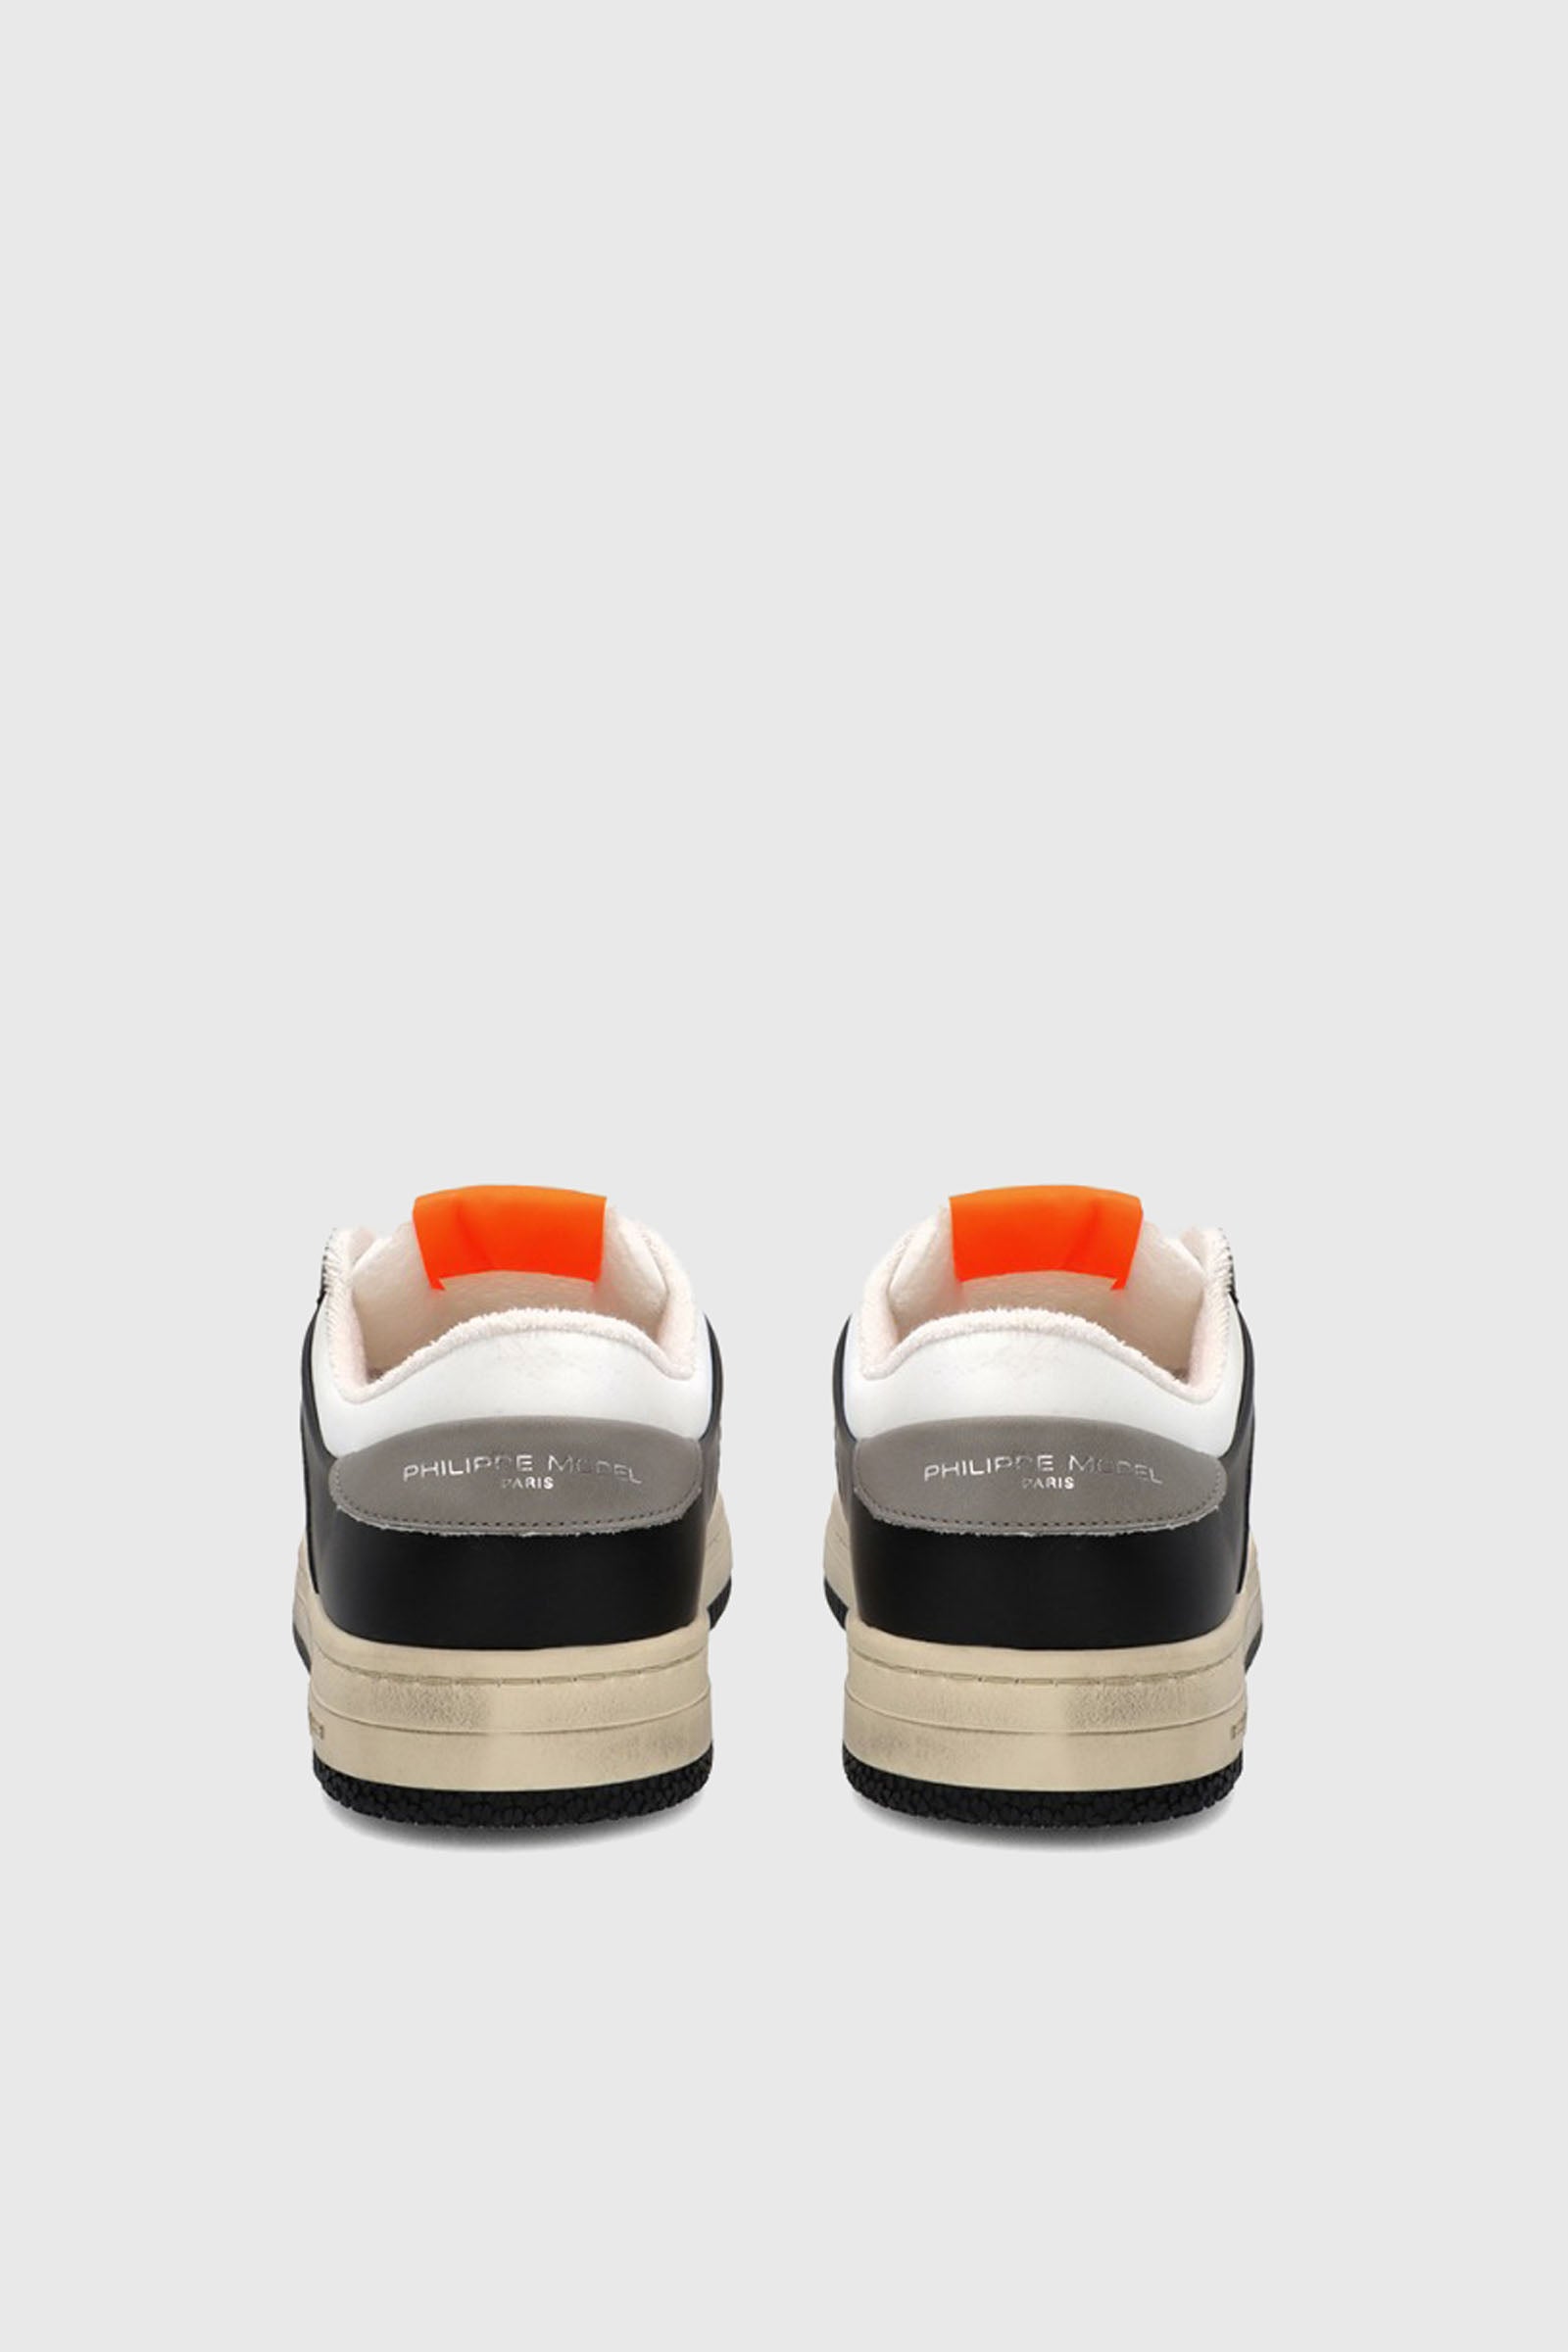 Philippe Model Sneaker Lyon Recycle Mixage Noir Orange Nero/bianco Uomo - 4